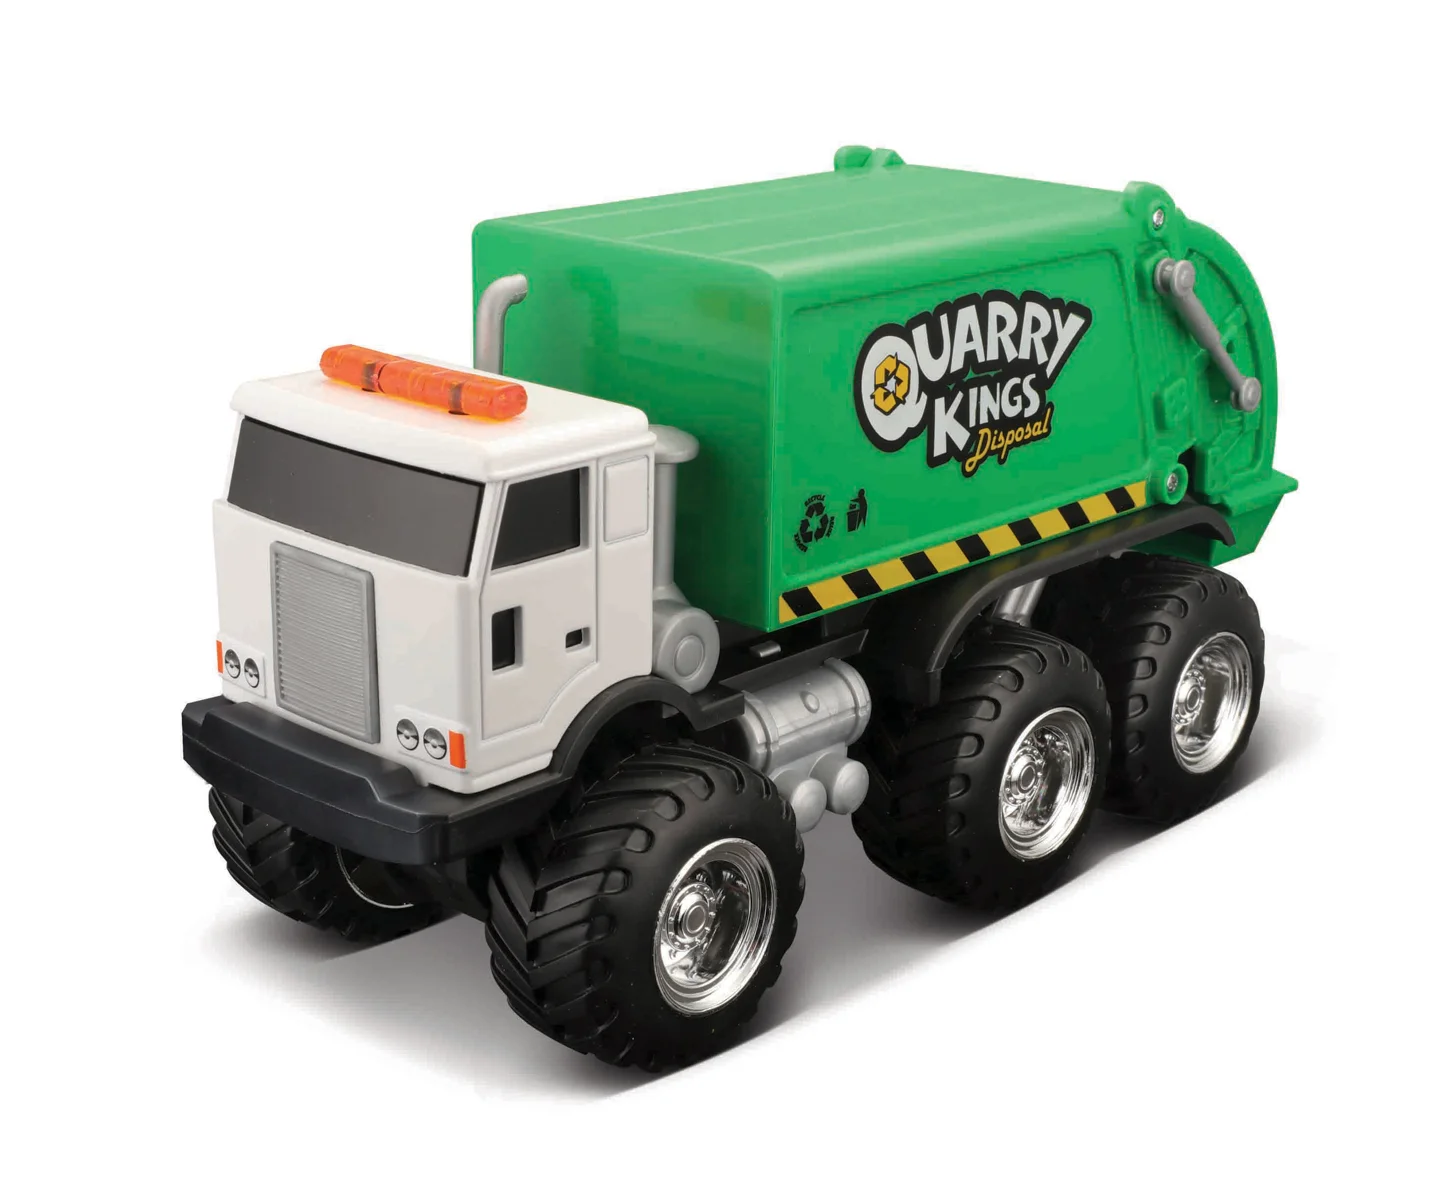 Maisto - Builder Zone Quarry monsters, užitkové vozy, popelářský vůz